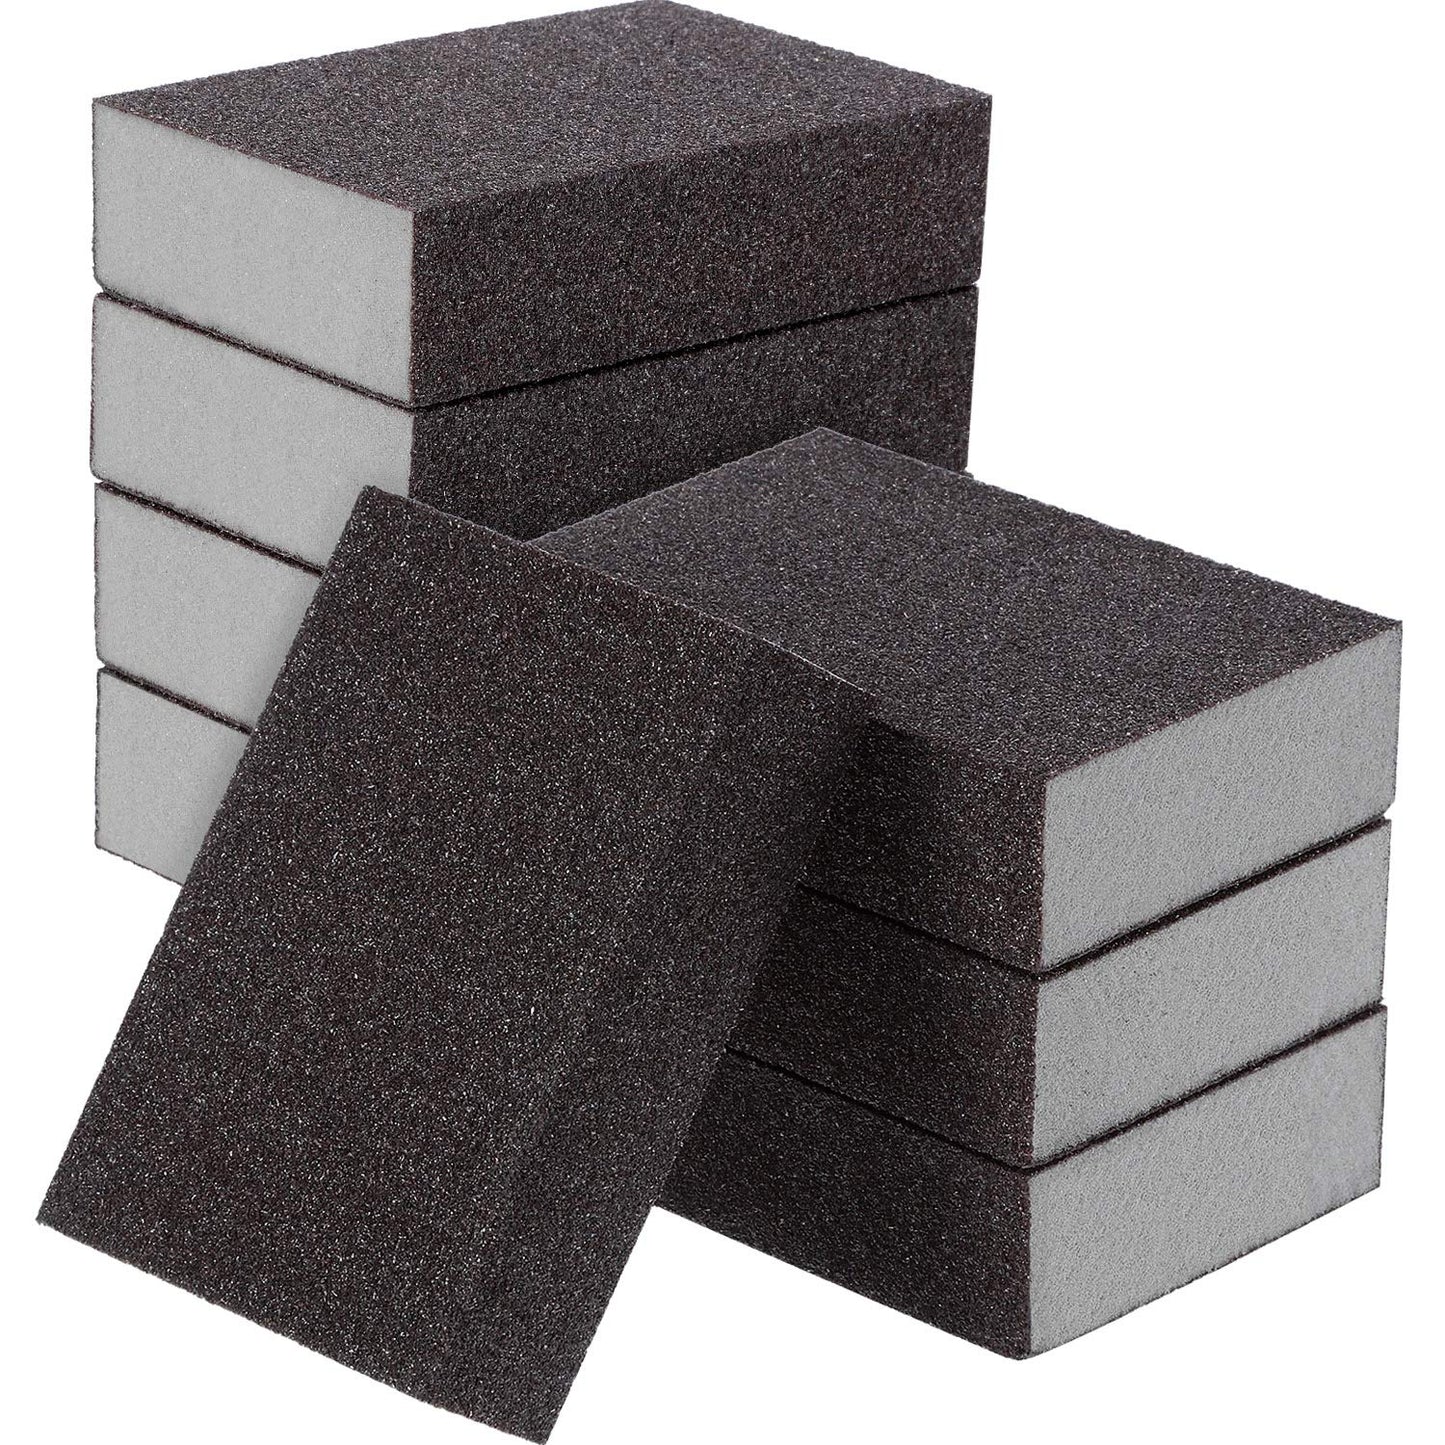 Coarse / Medium Sanding Sponge